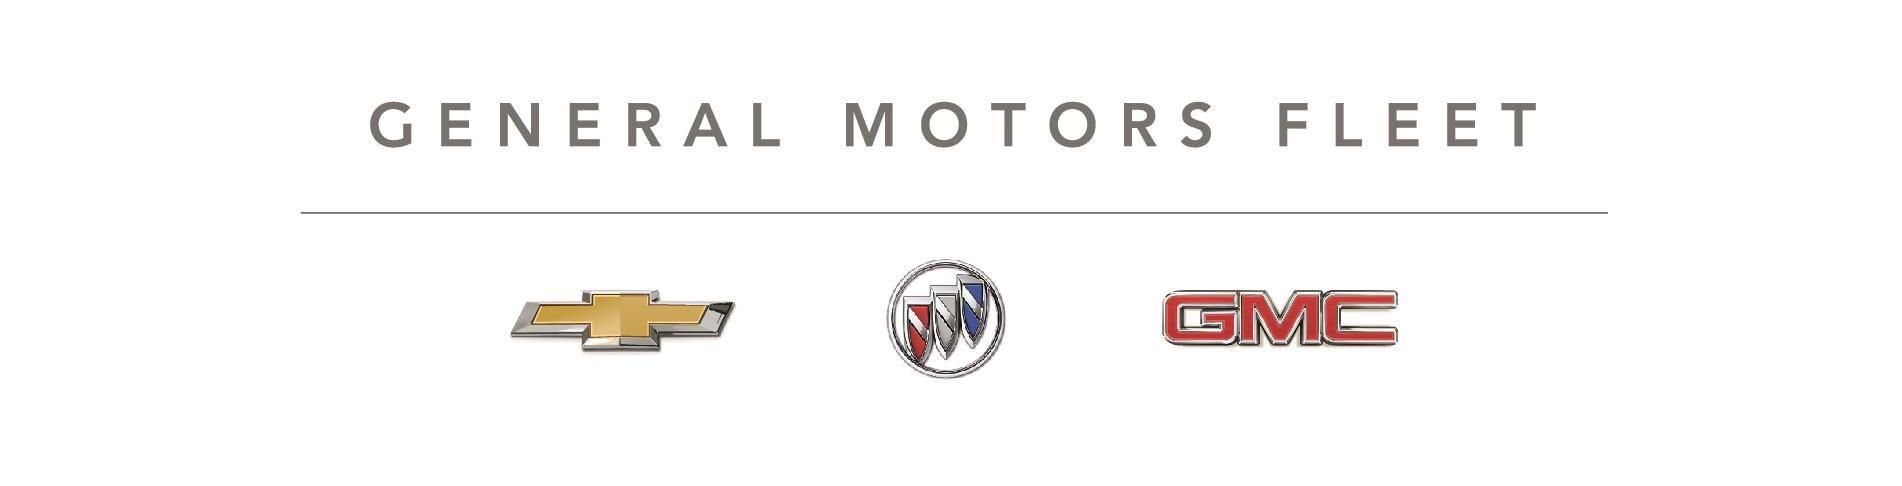 new-general-motors-logo